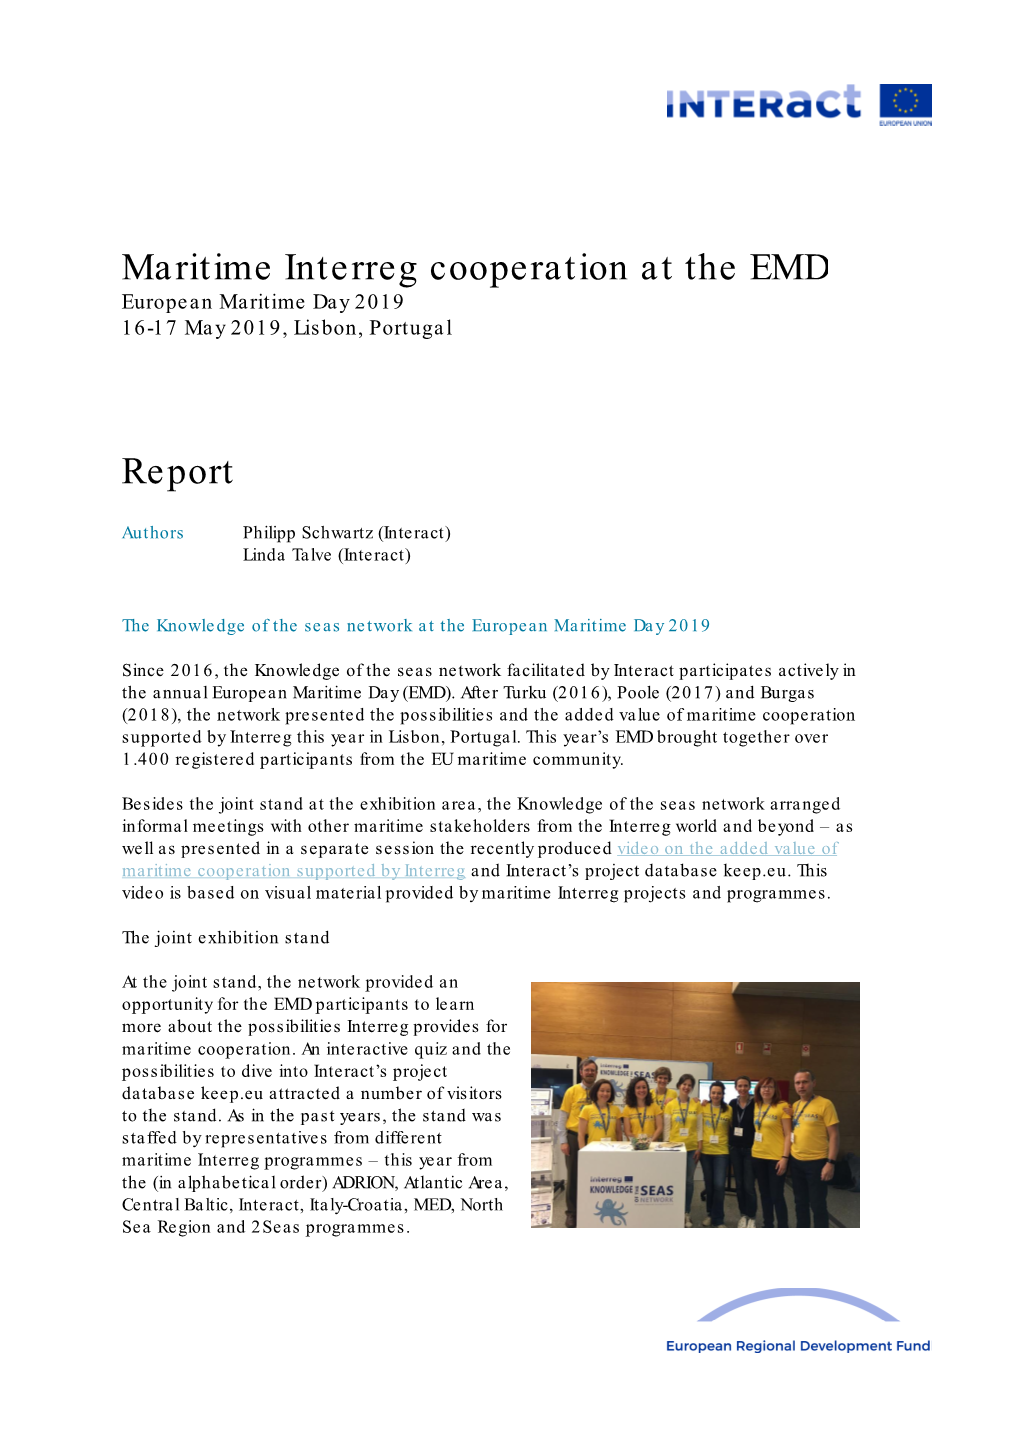 Maritime Interreg Cooperation at the EMD Report